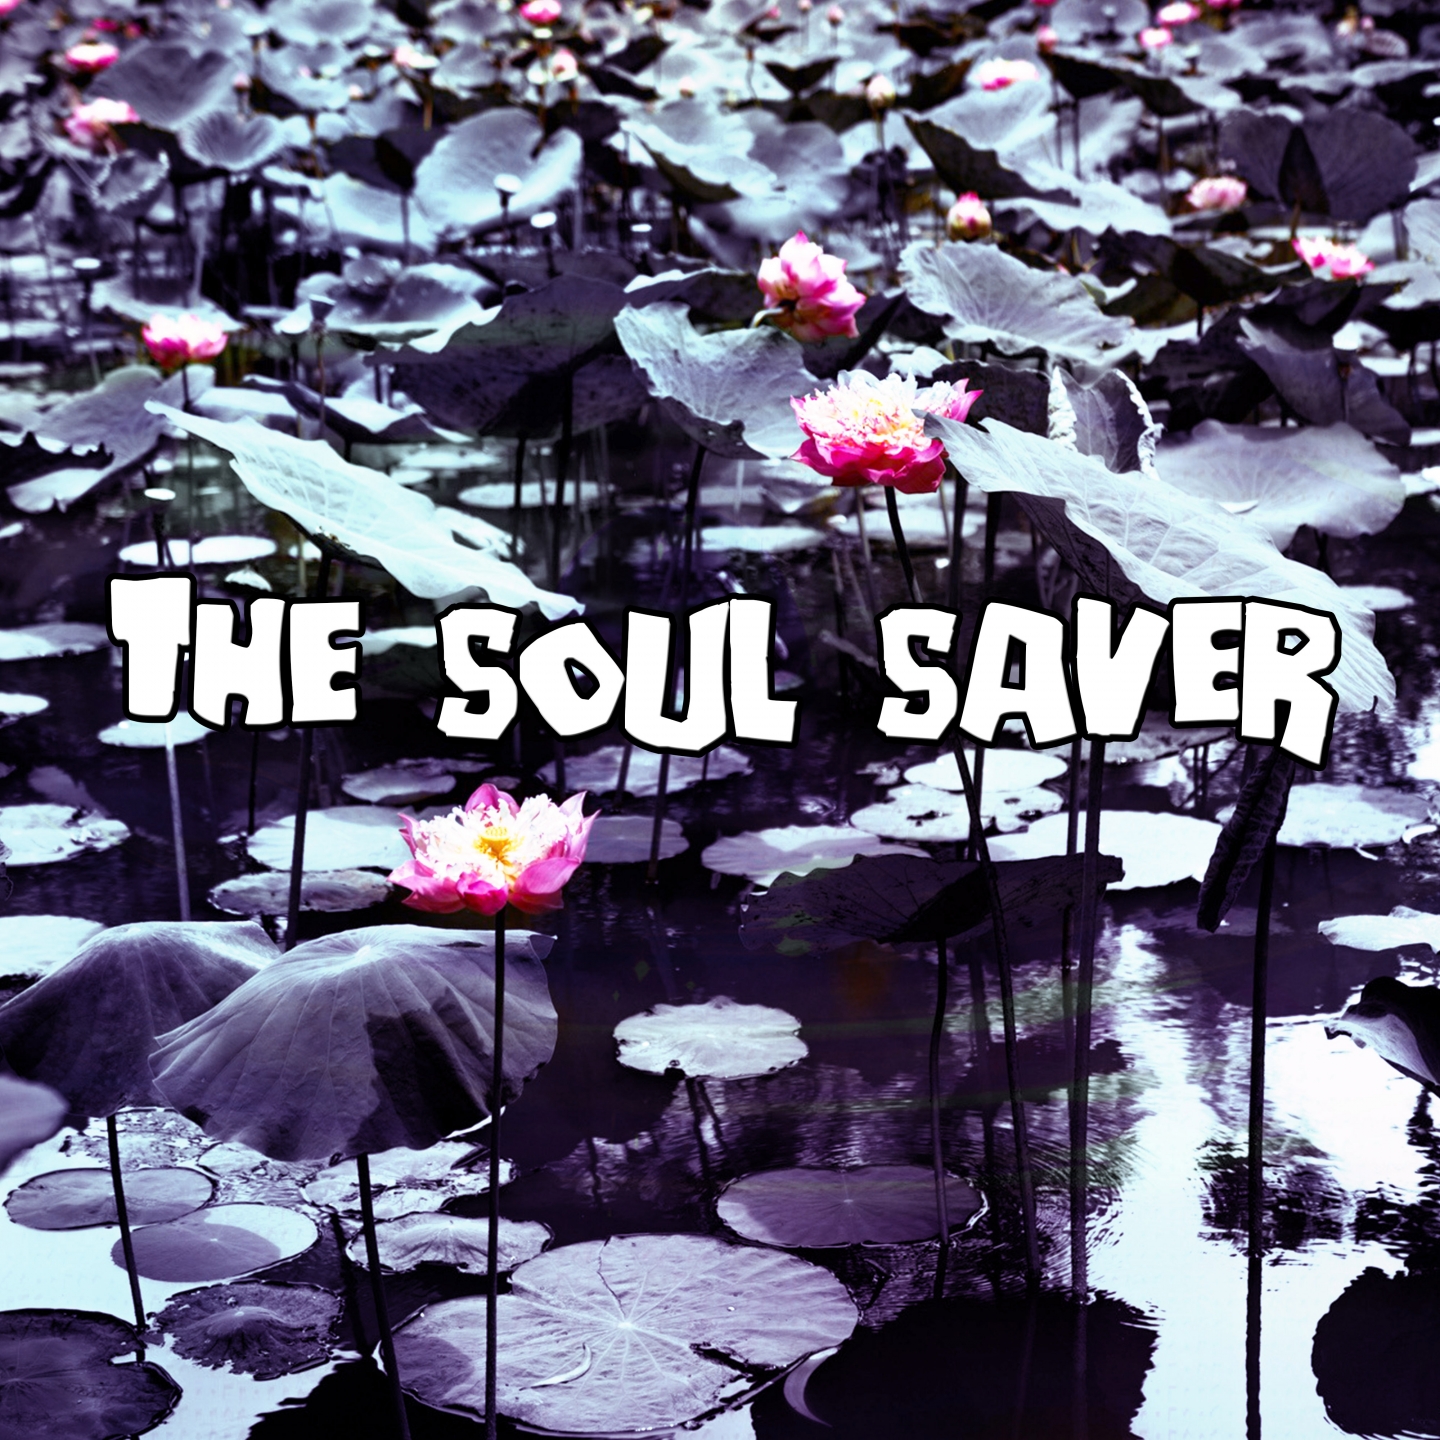 The Soul Saver